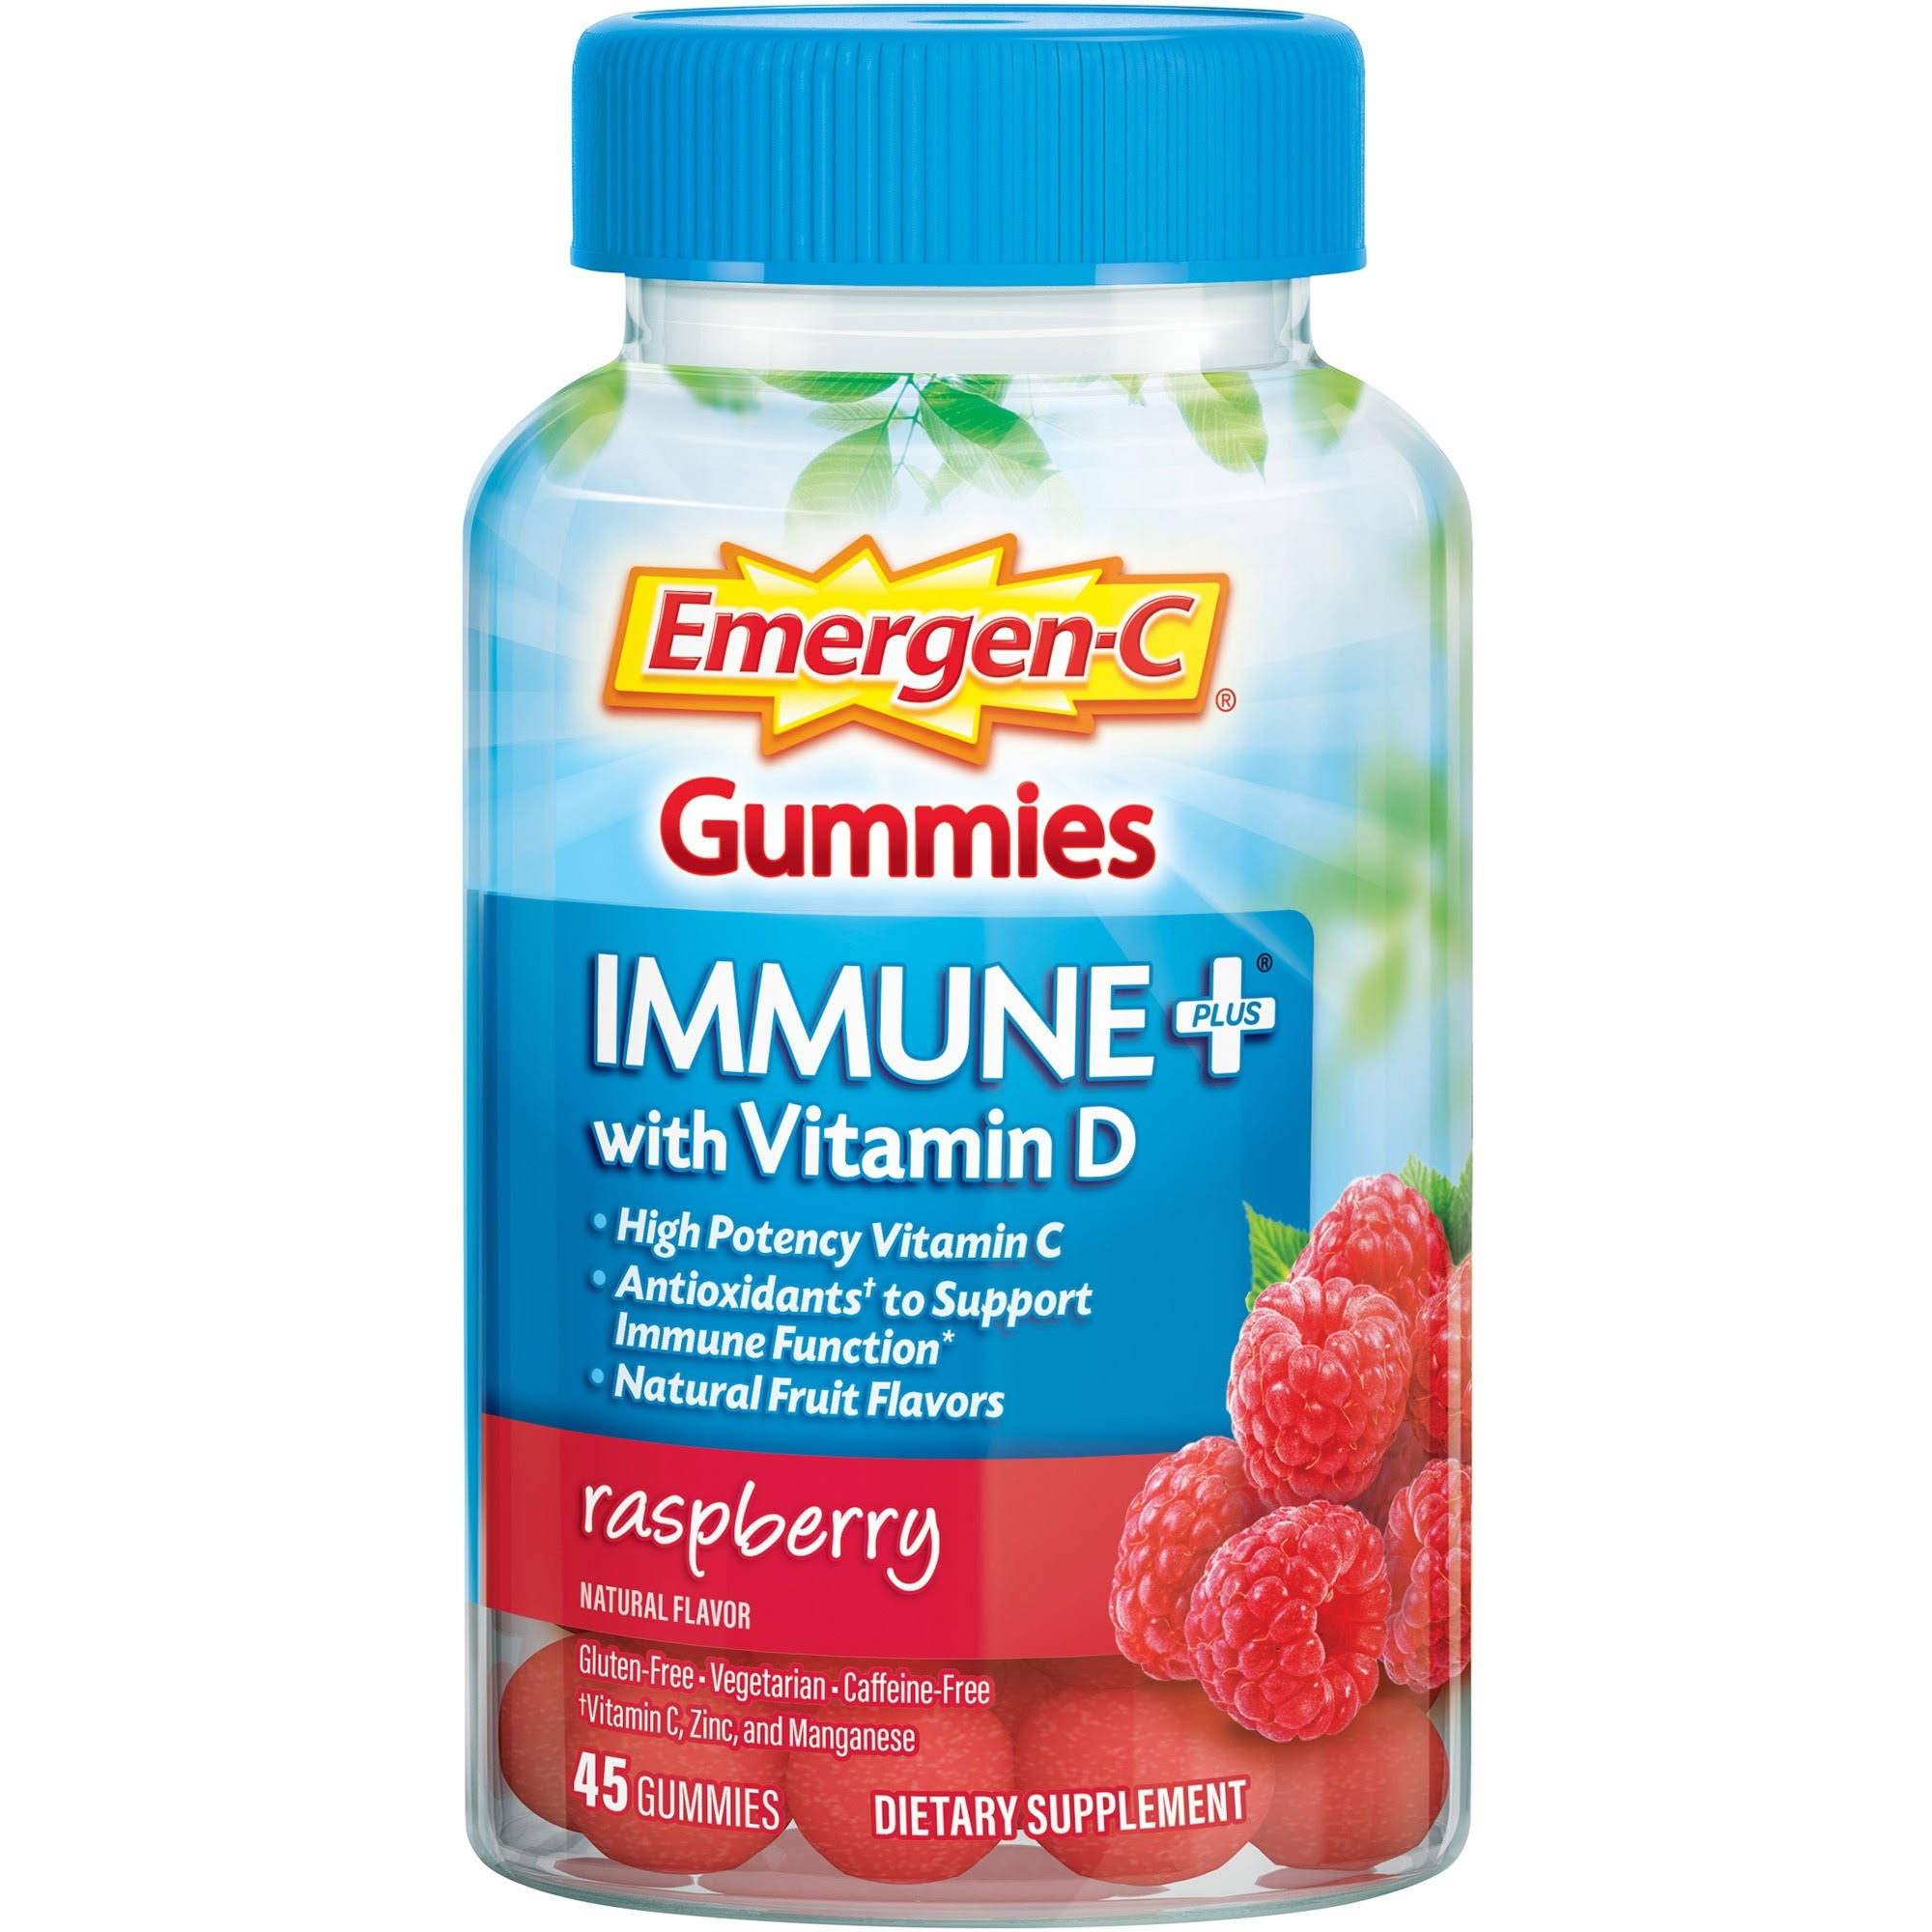 Emergen-C Immune Plus with Vitamin D Gummies - Raspberry, 45pcs